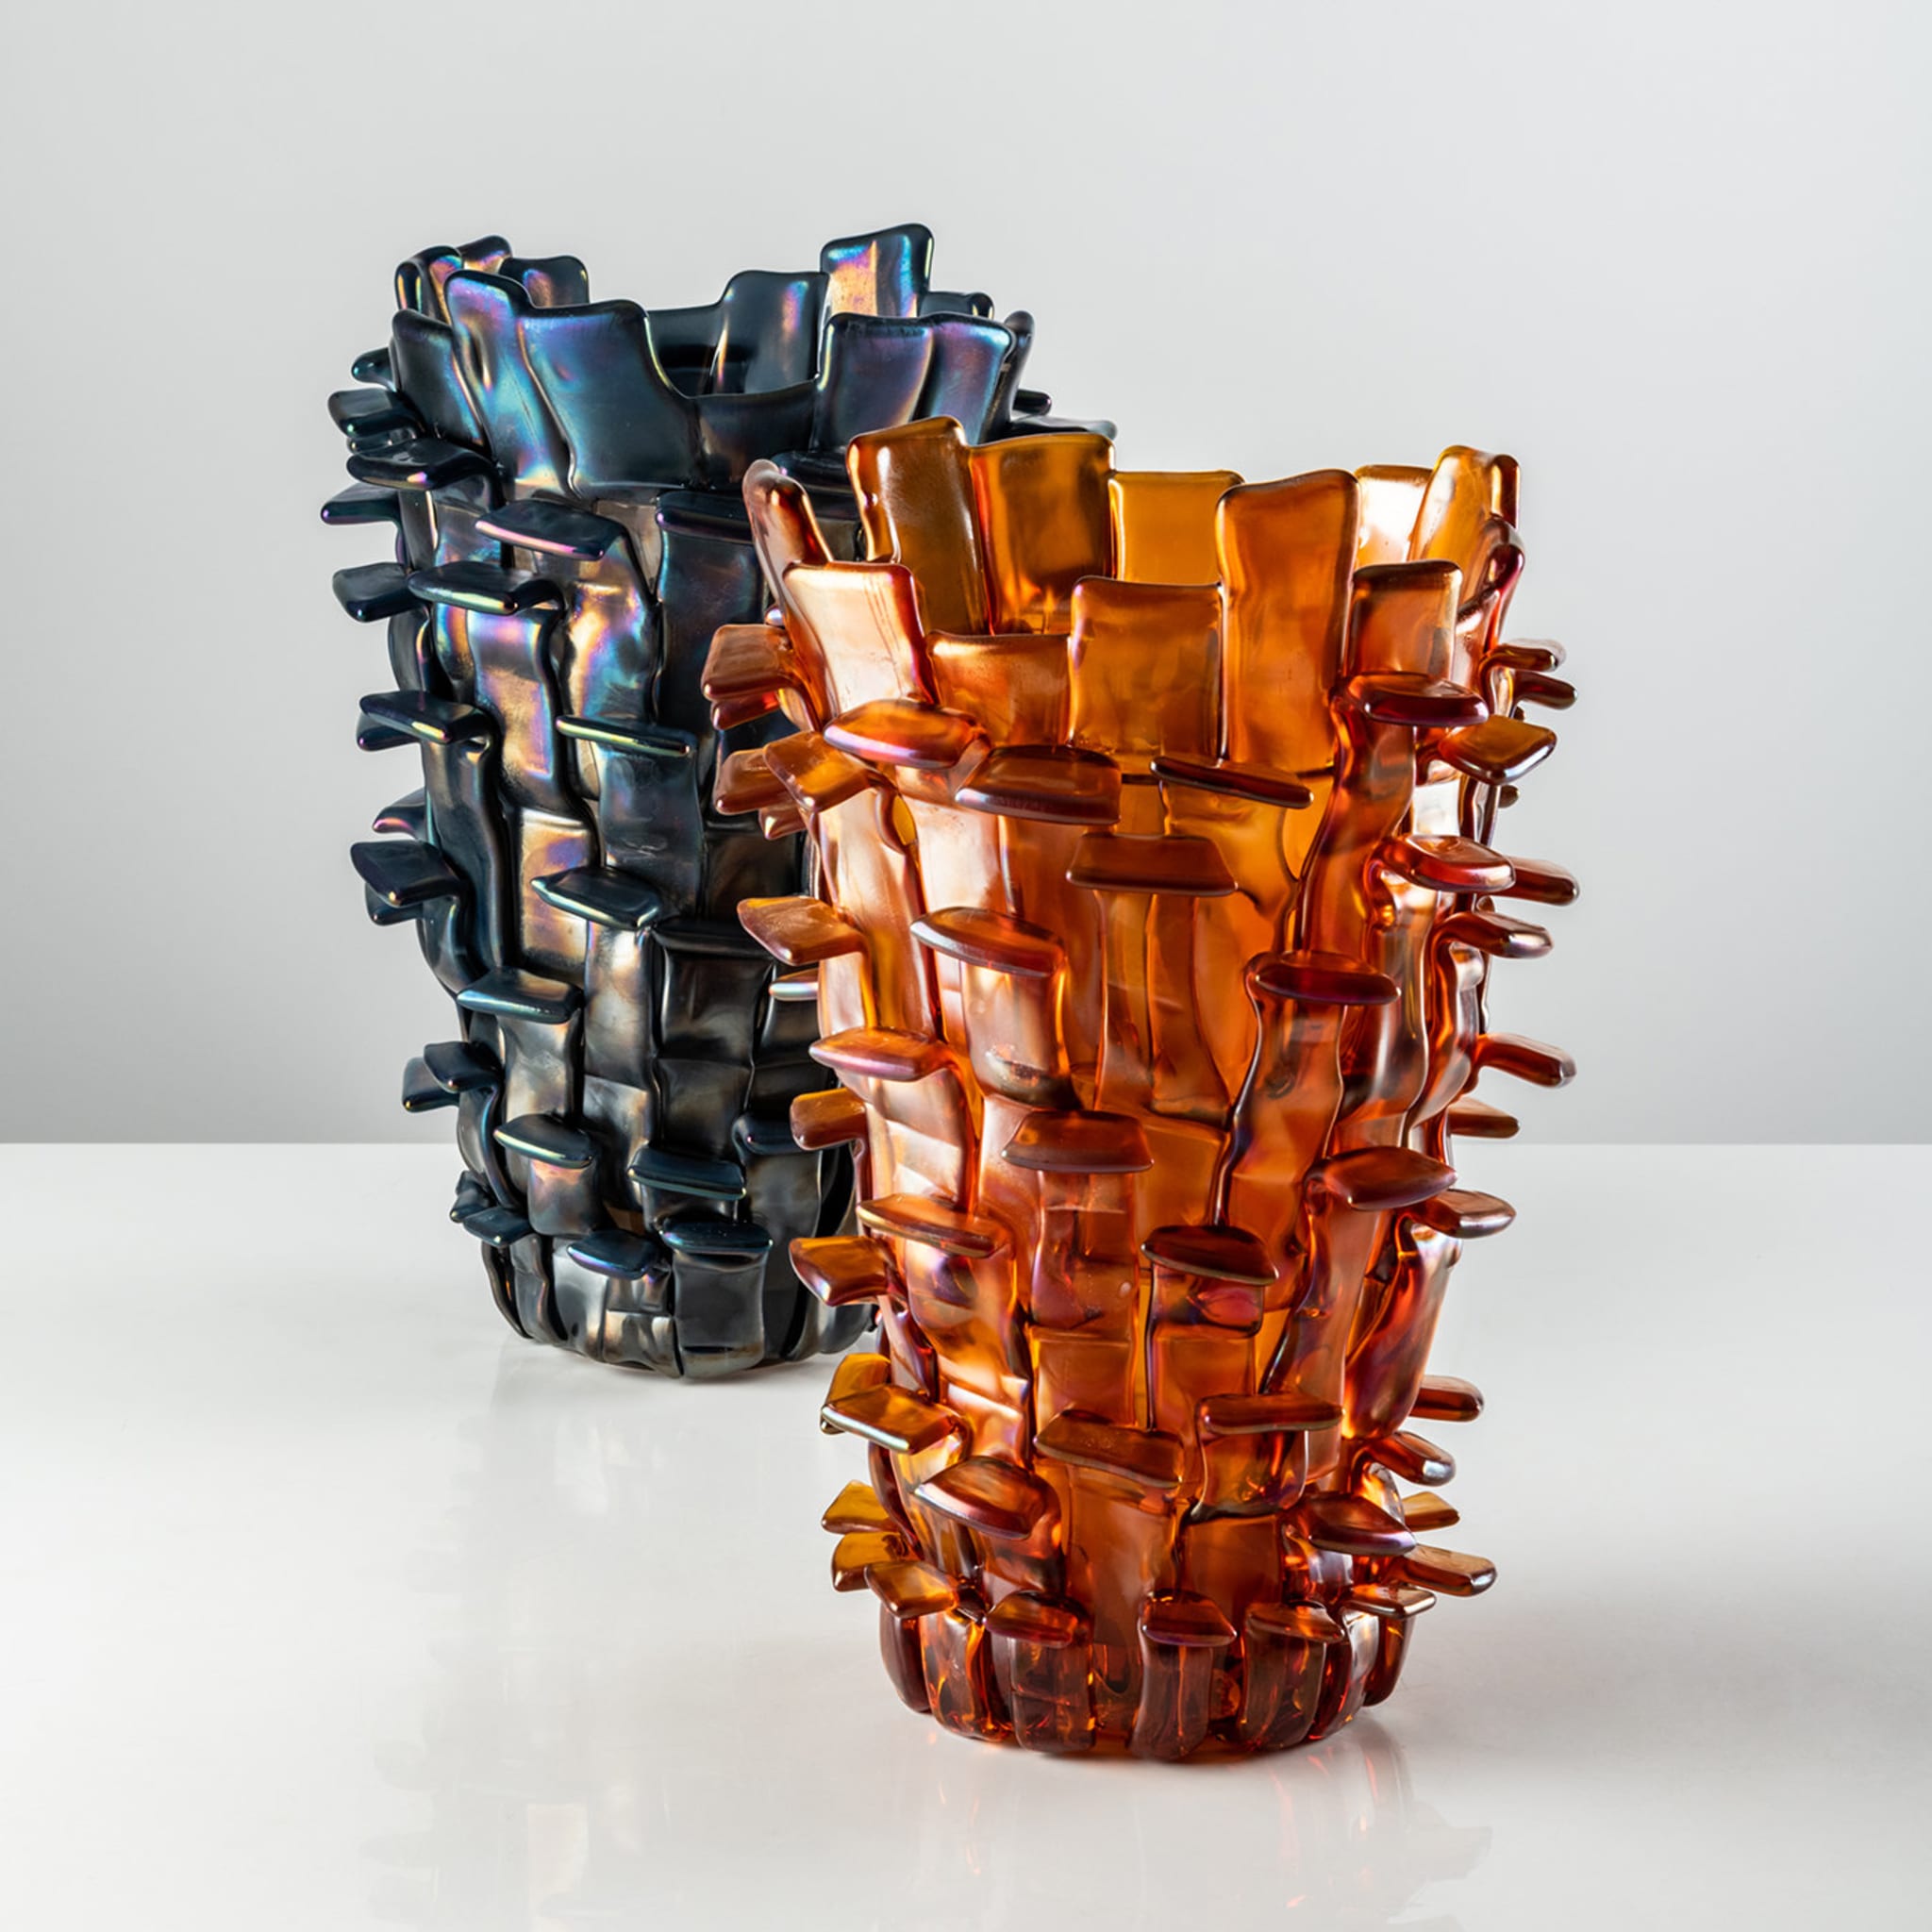 Ritagli Amber Vase by Fulvio Bianconi Limited Edition - Alternative view 1